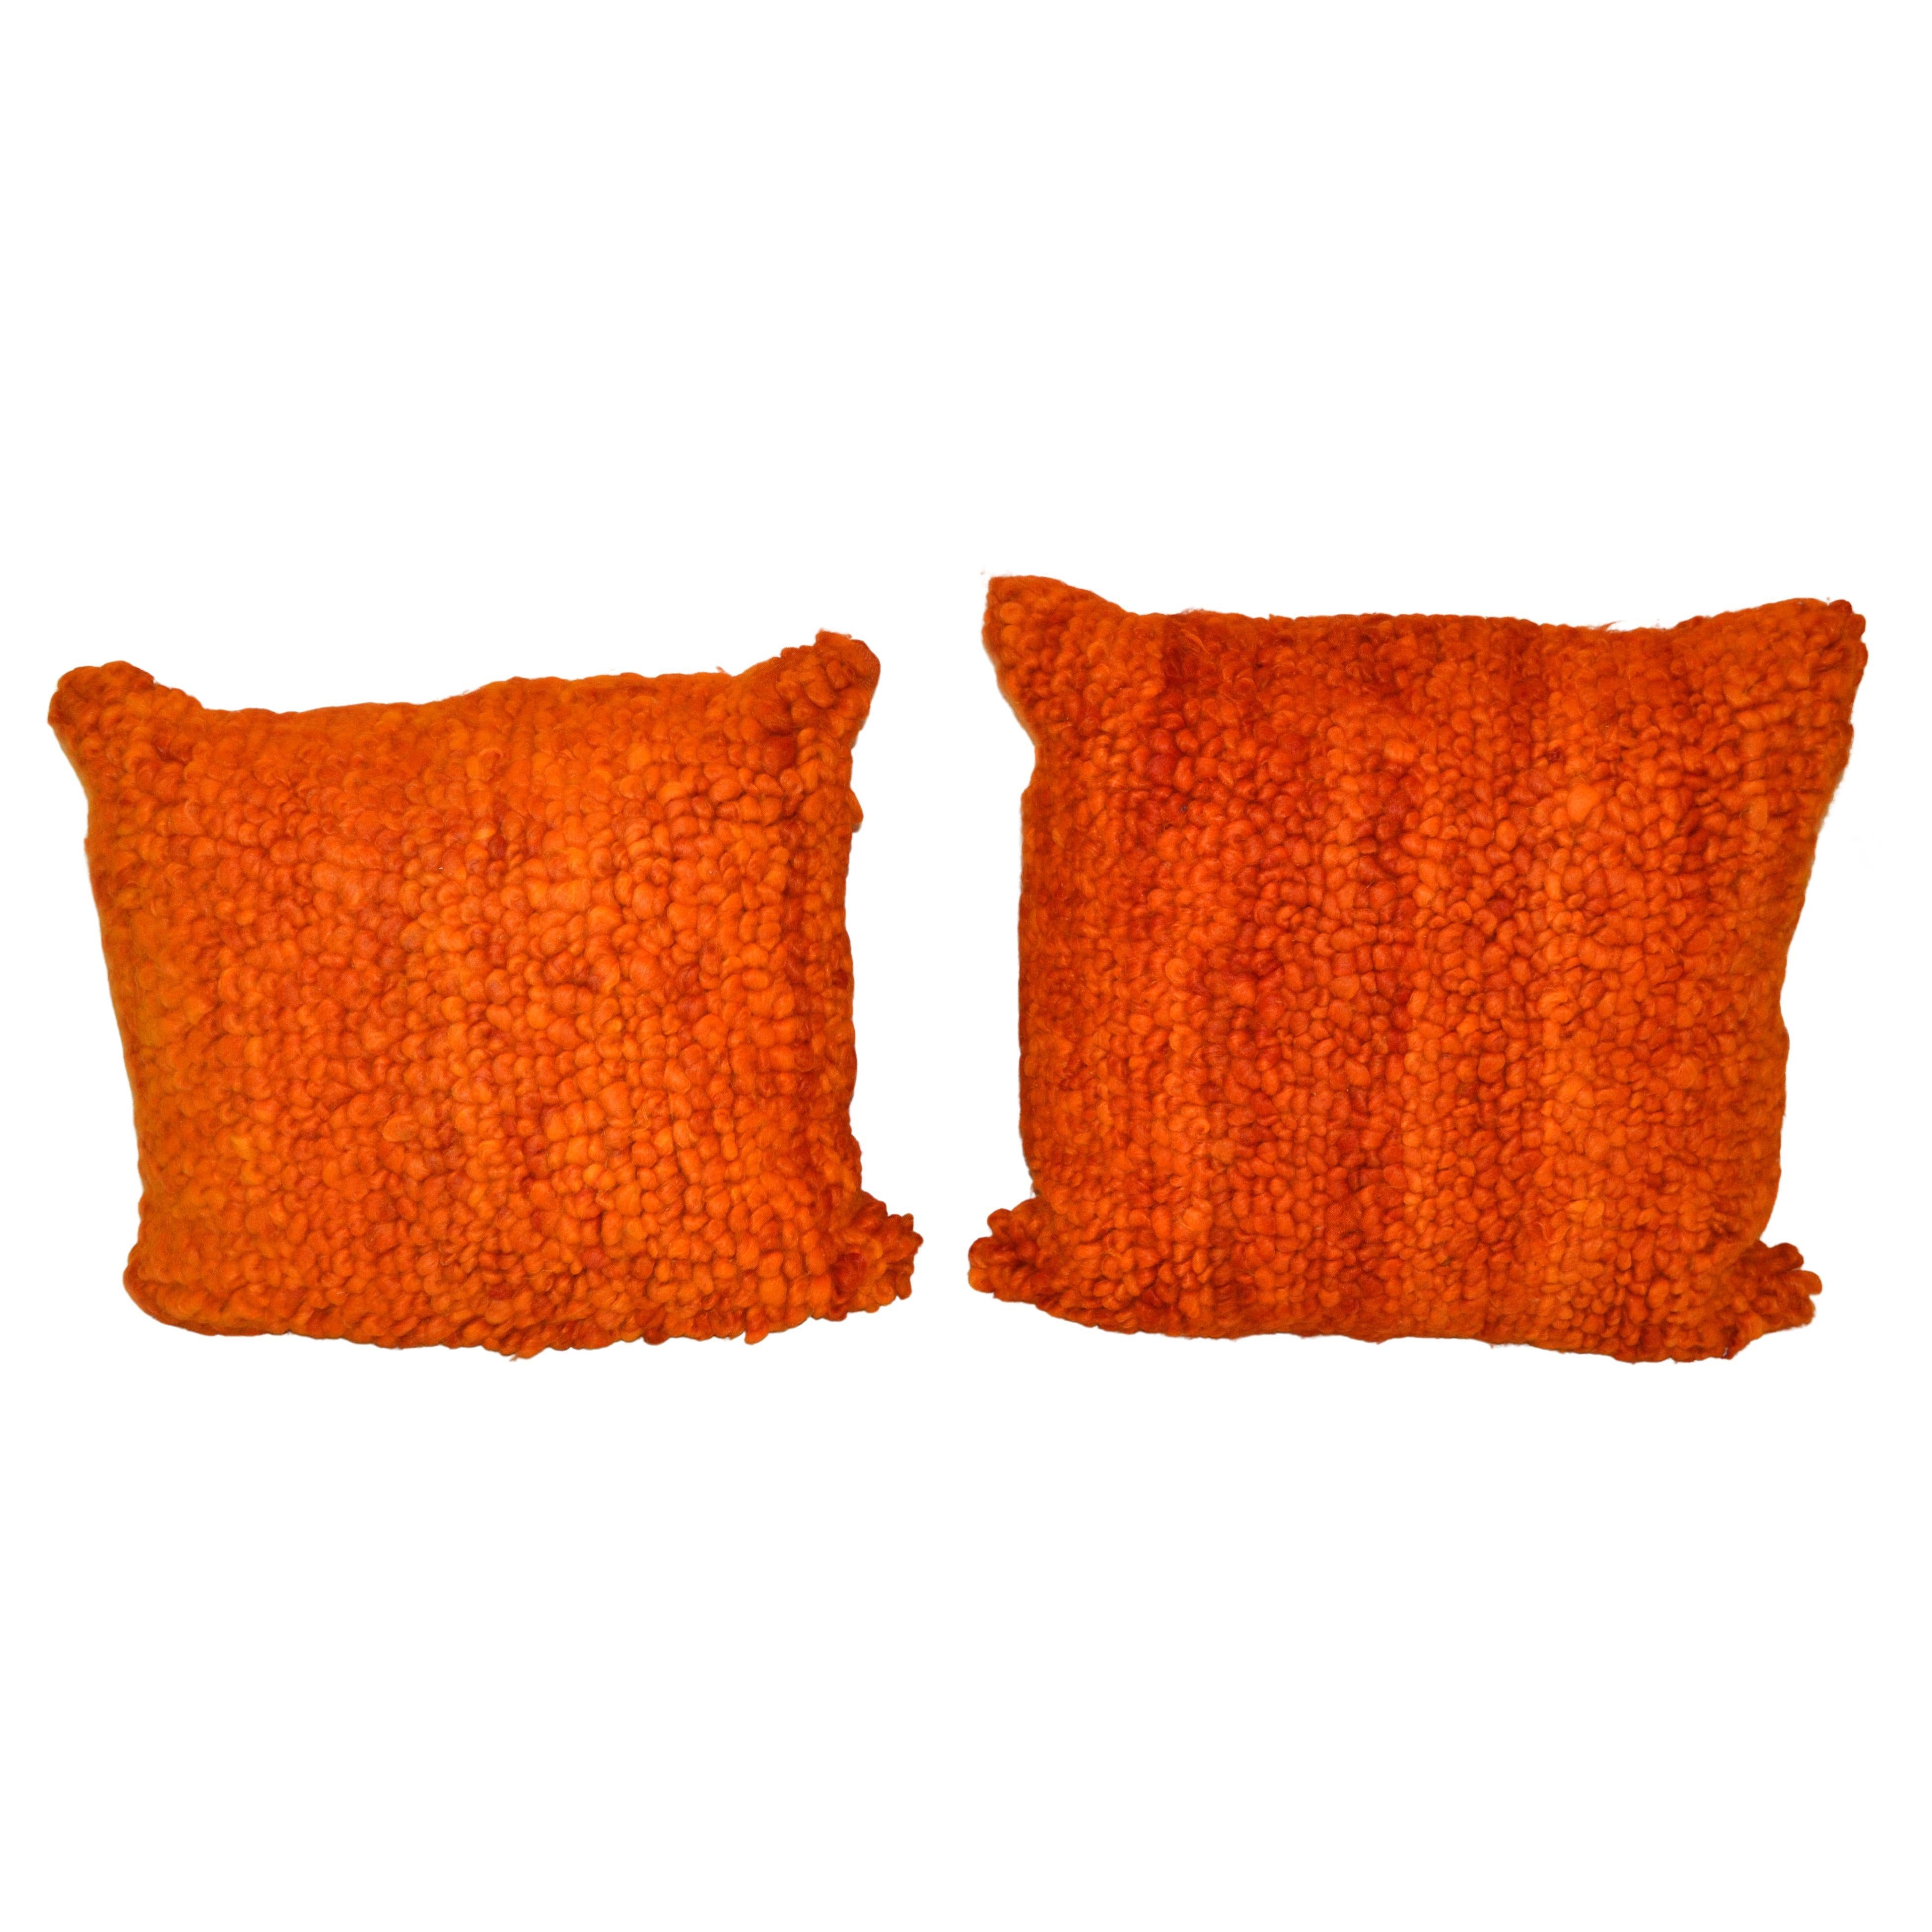 Jonathan Adler Orange Flair Primaloft Down-Filled Pillows Mid-Century Modern Set For Sale